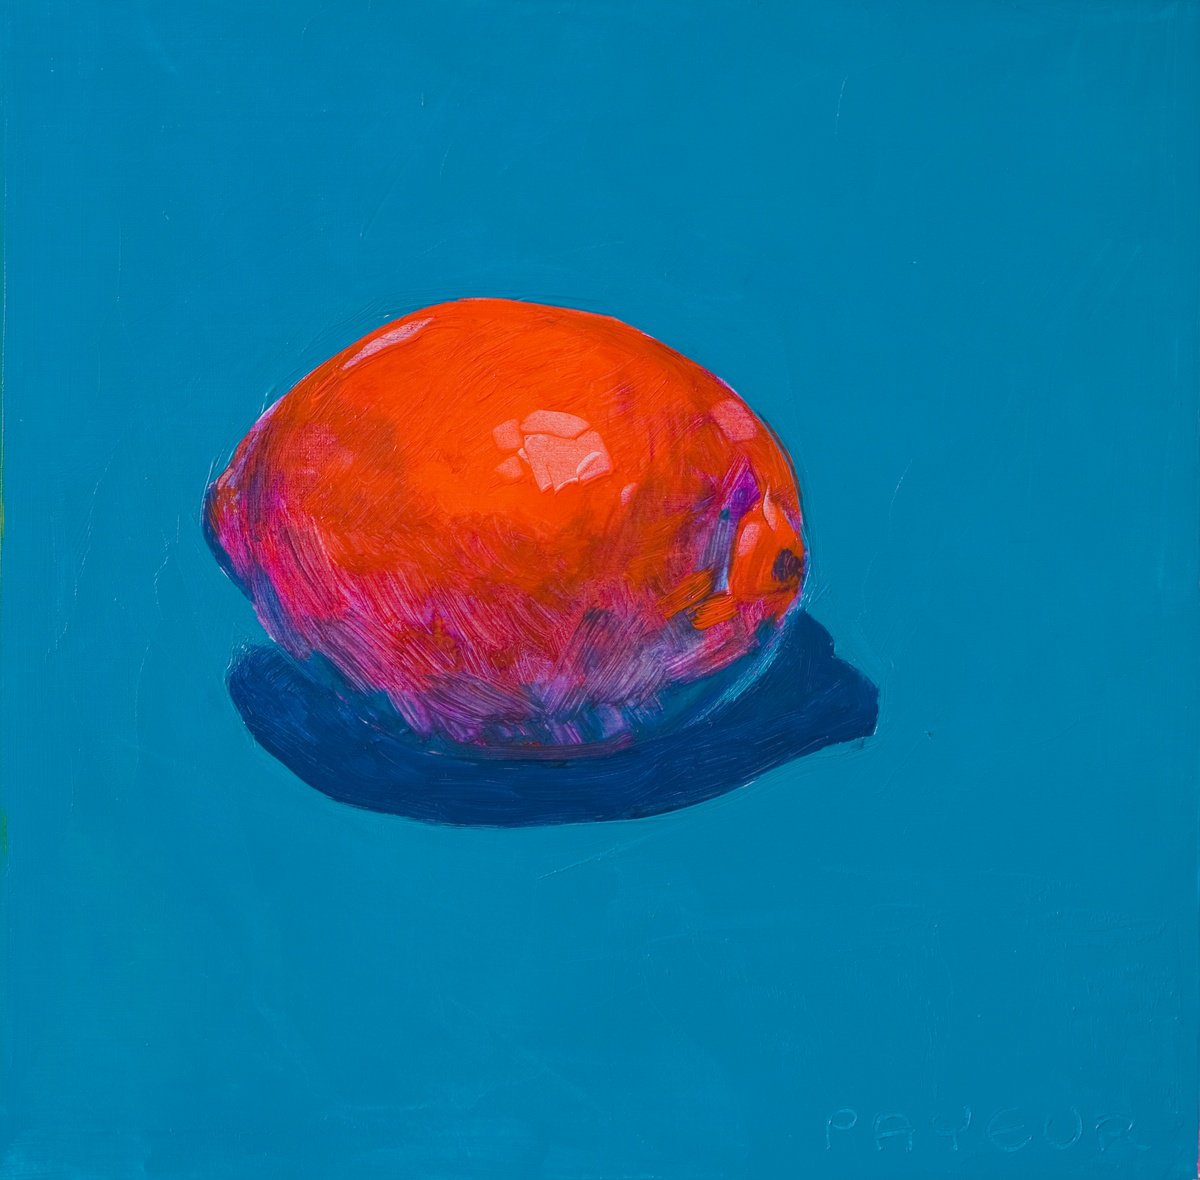 pop art red lemon on blue by Olivier Payeur